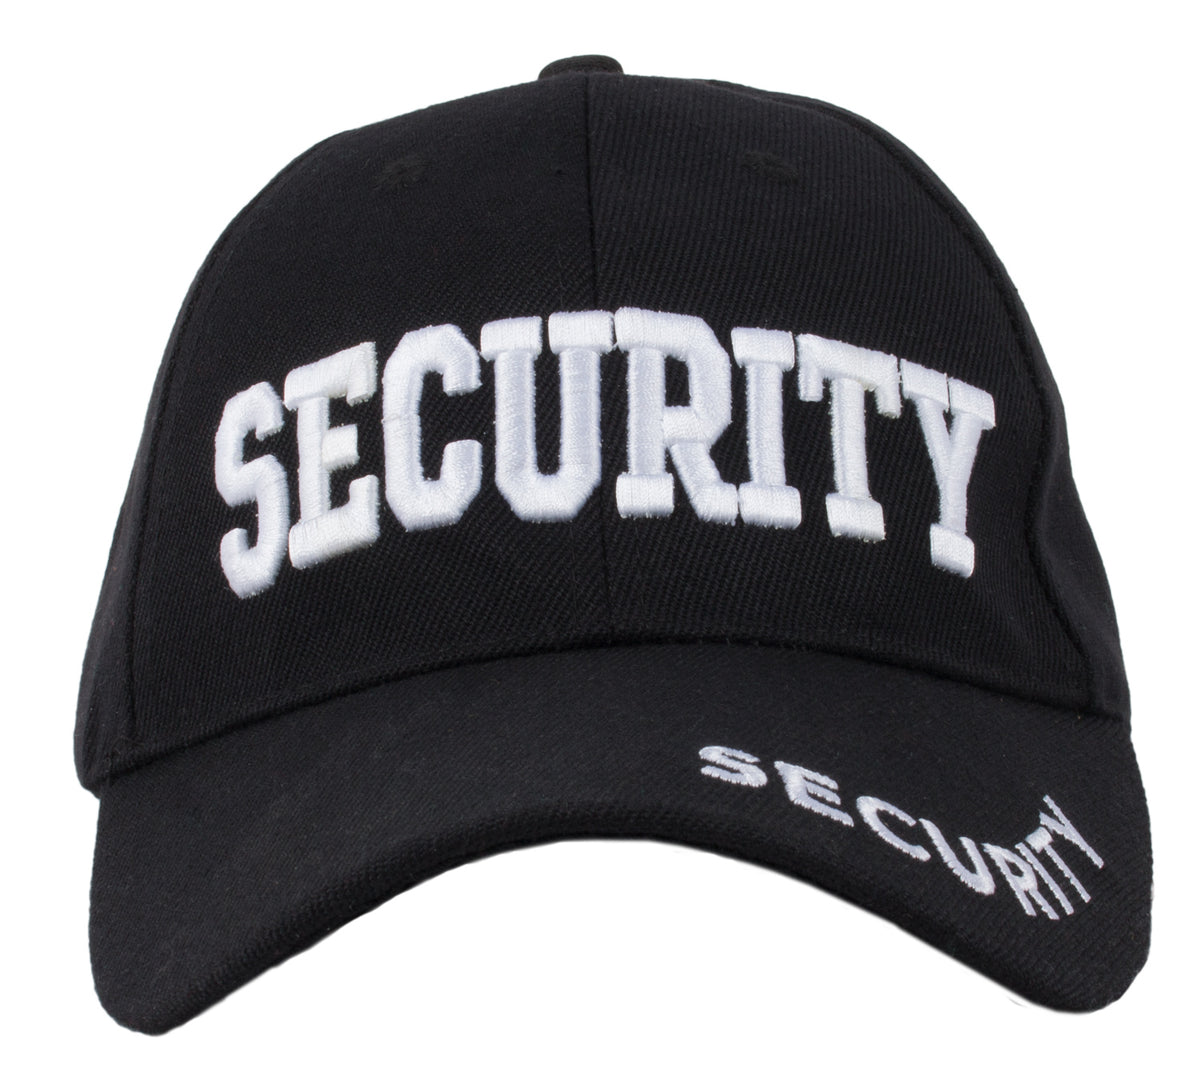 SECURITY Hat & T-shirt Bundle | Matching Security Guard Officer Uniform Kit